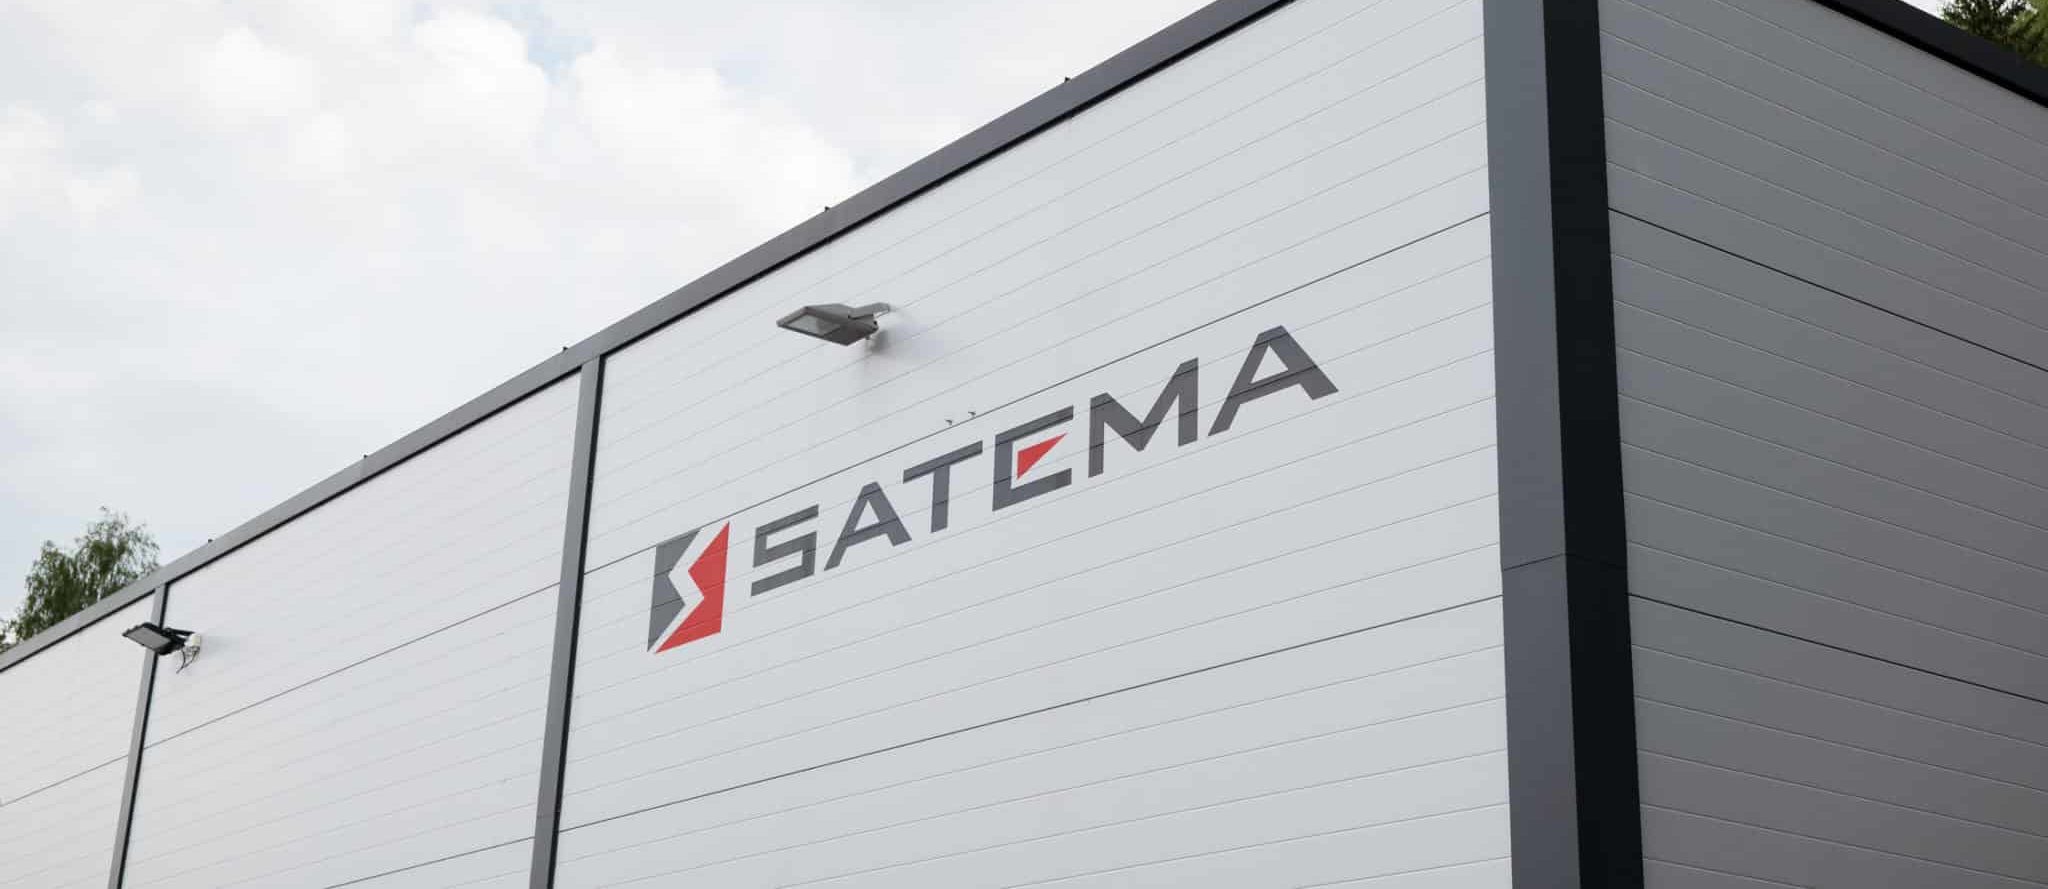 Satema logo på produksjonlokale